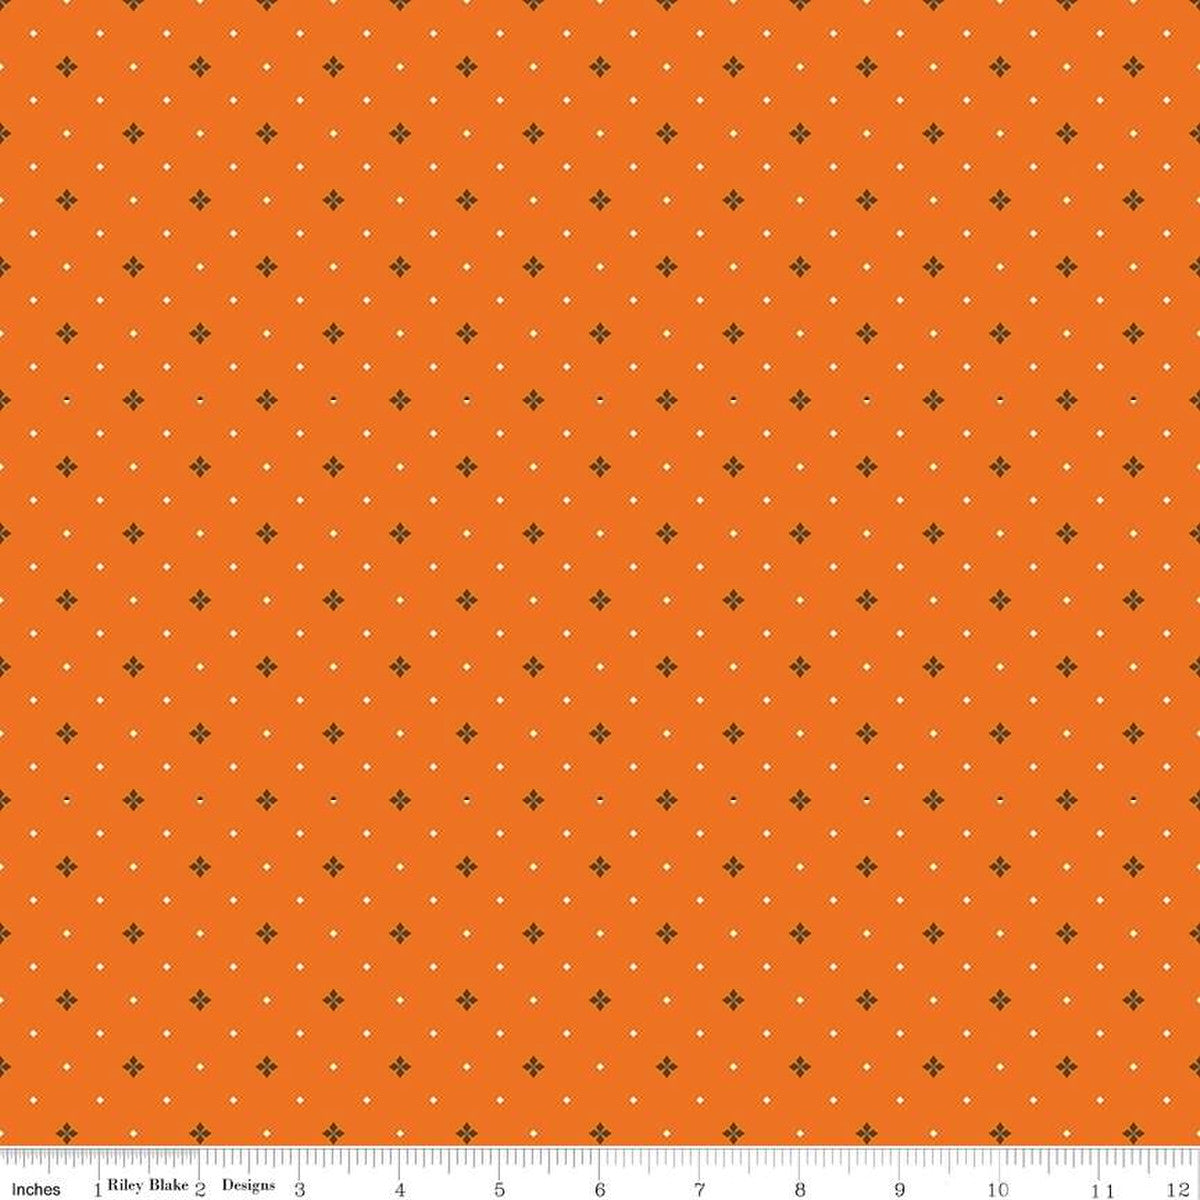 Awesome Autumn C12176-Orange Ditzy